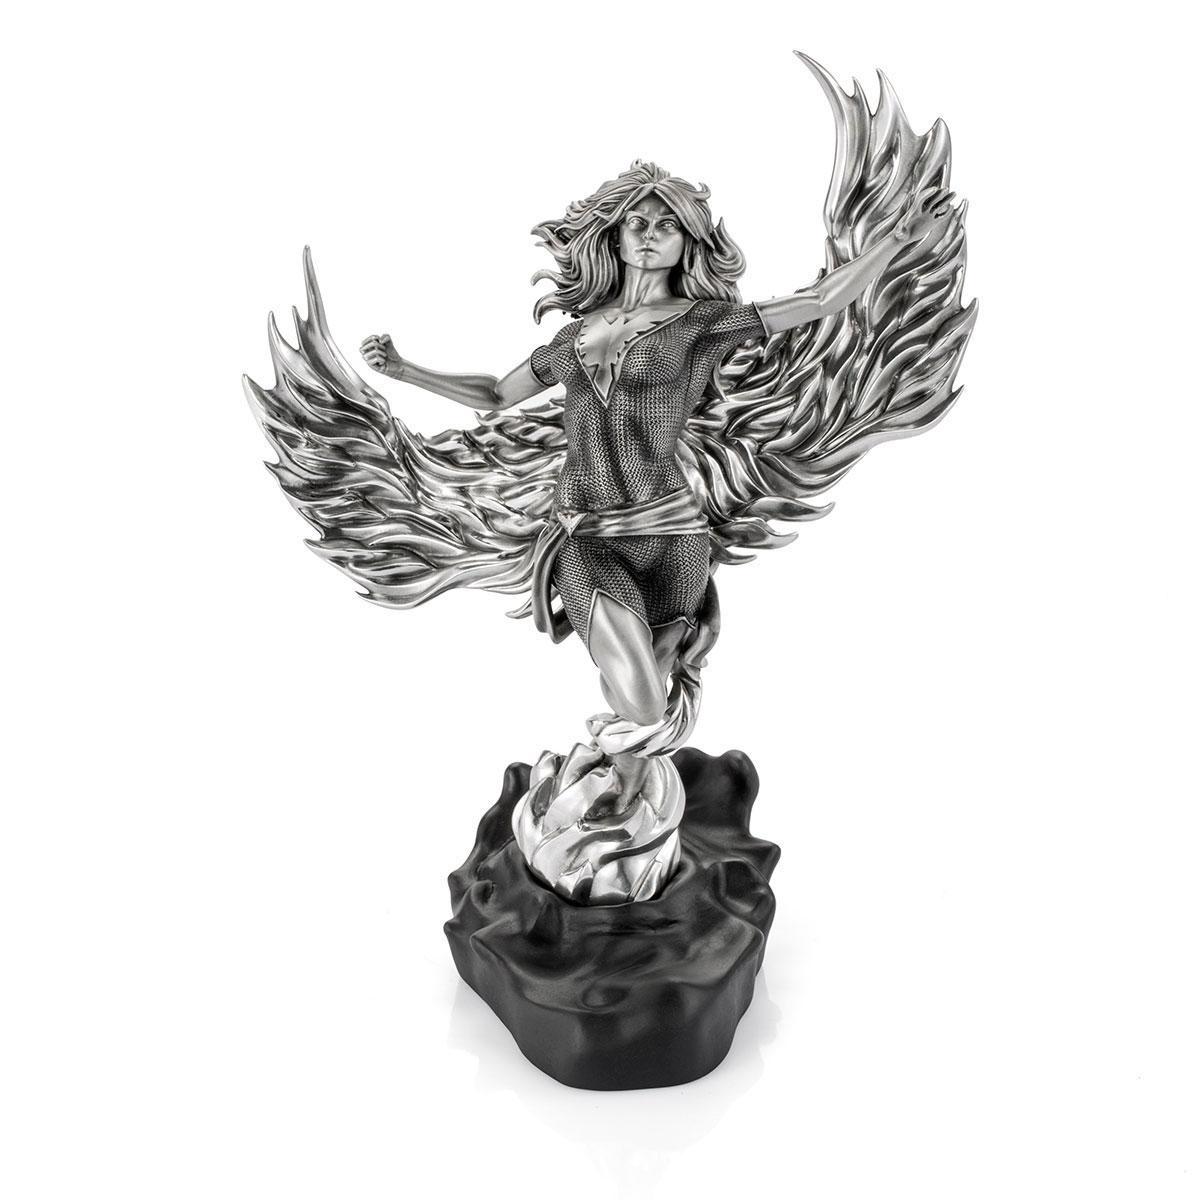 Limited Edition Phoenix Arising Figurine